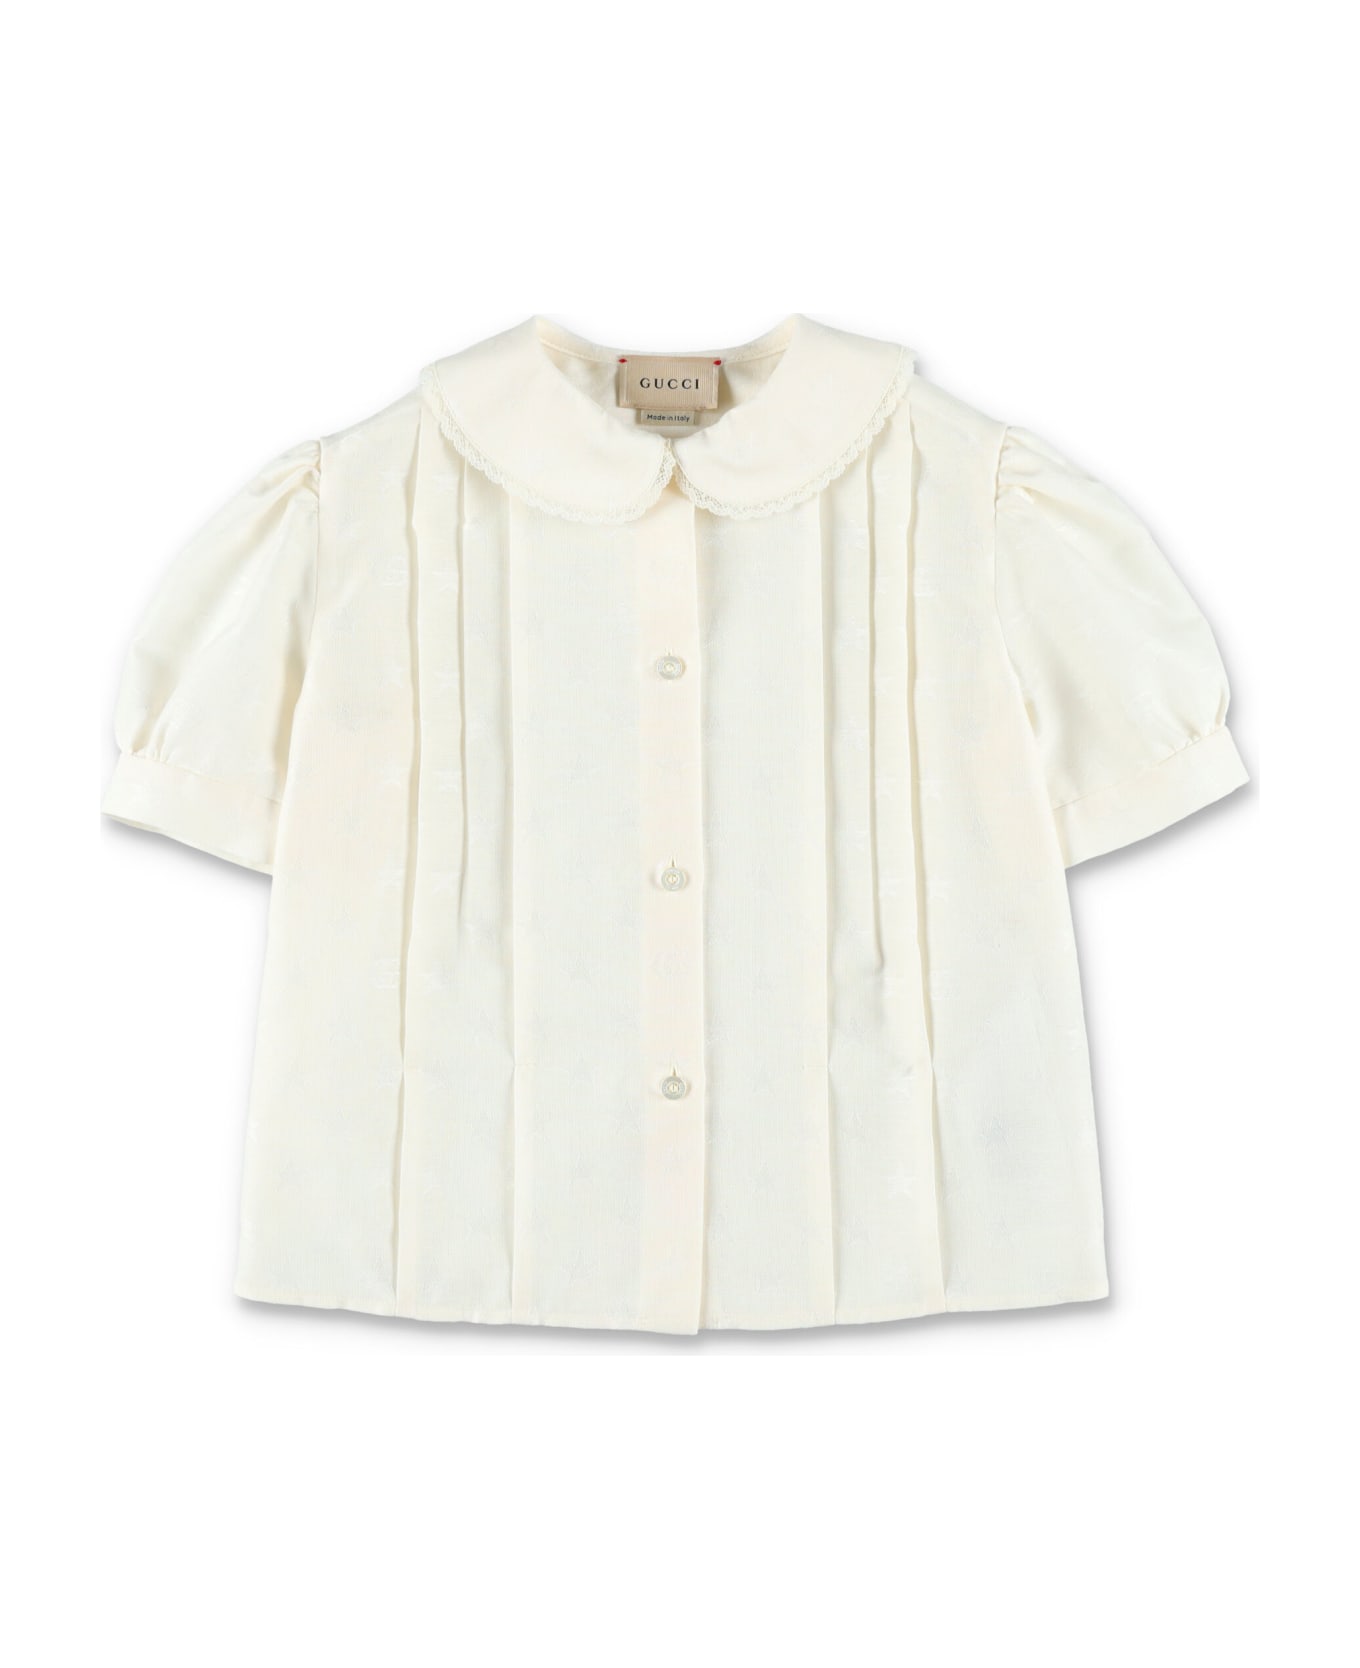 Gucci Gg Star Jacquard Shirt - White シャツ